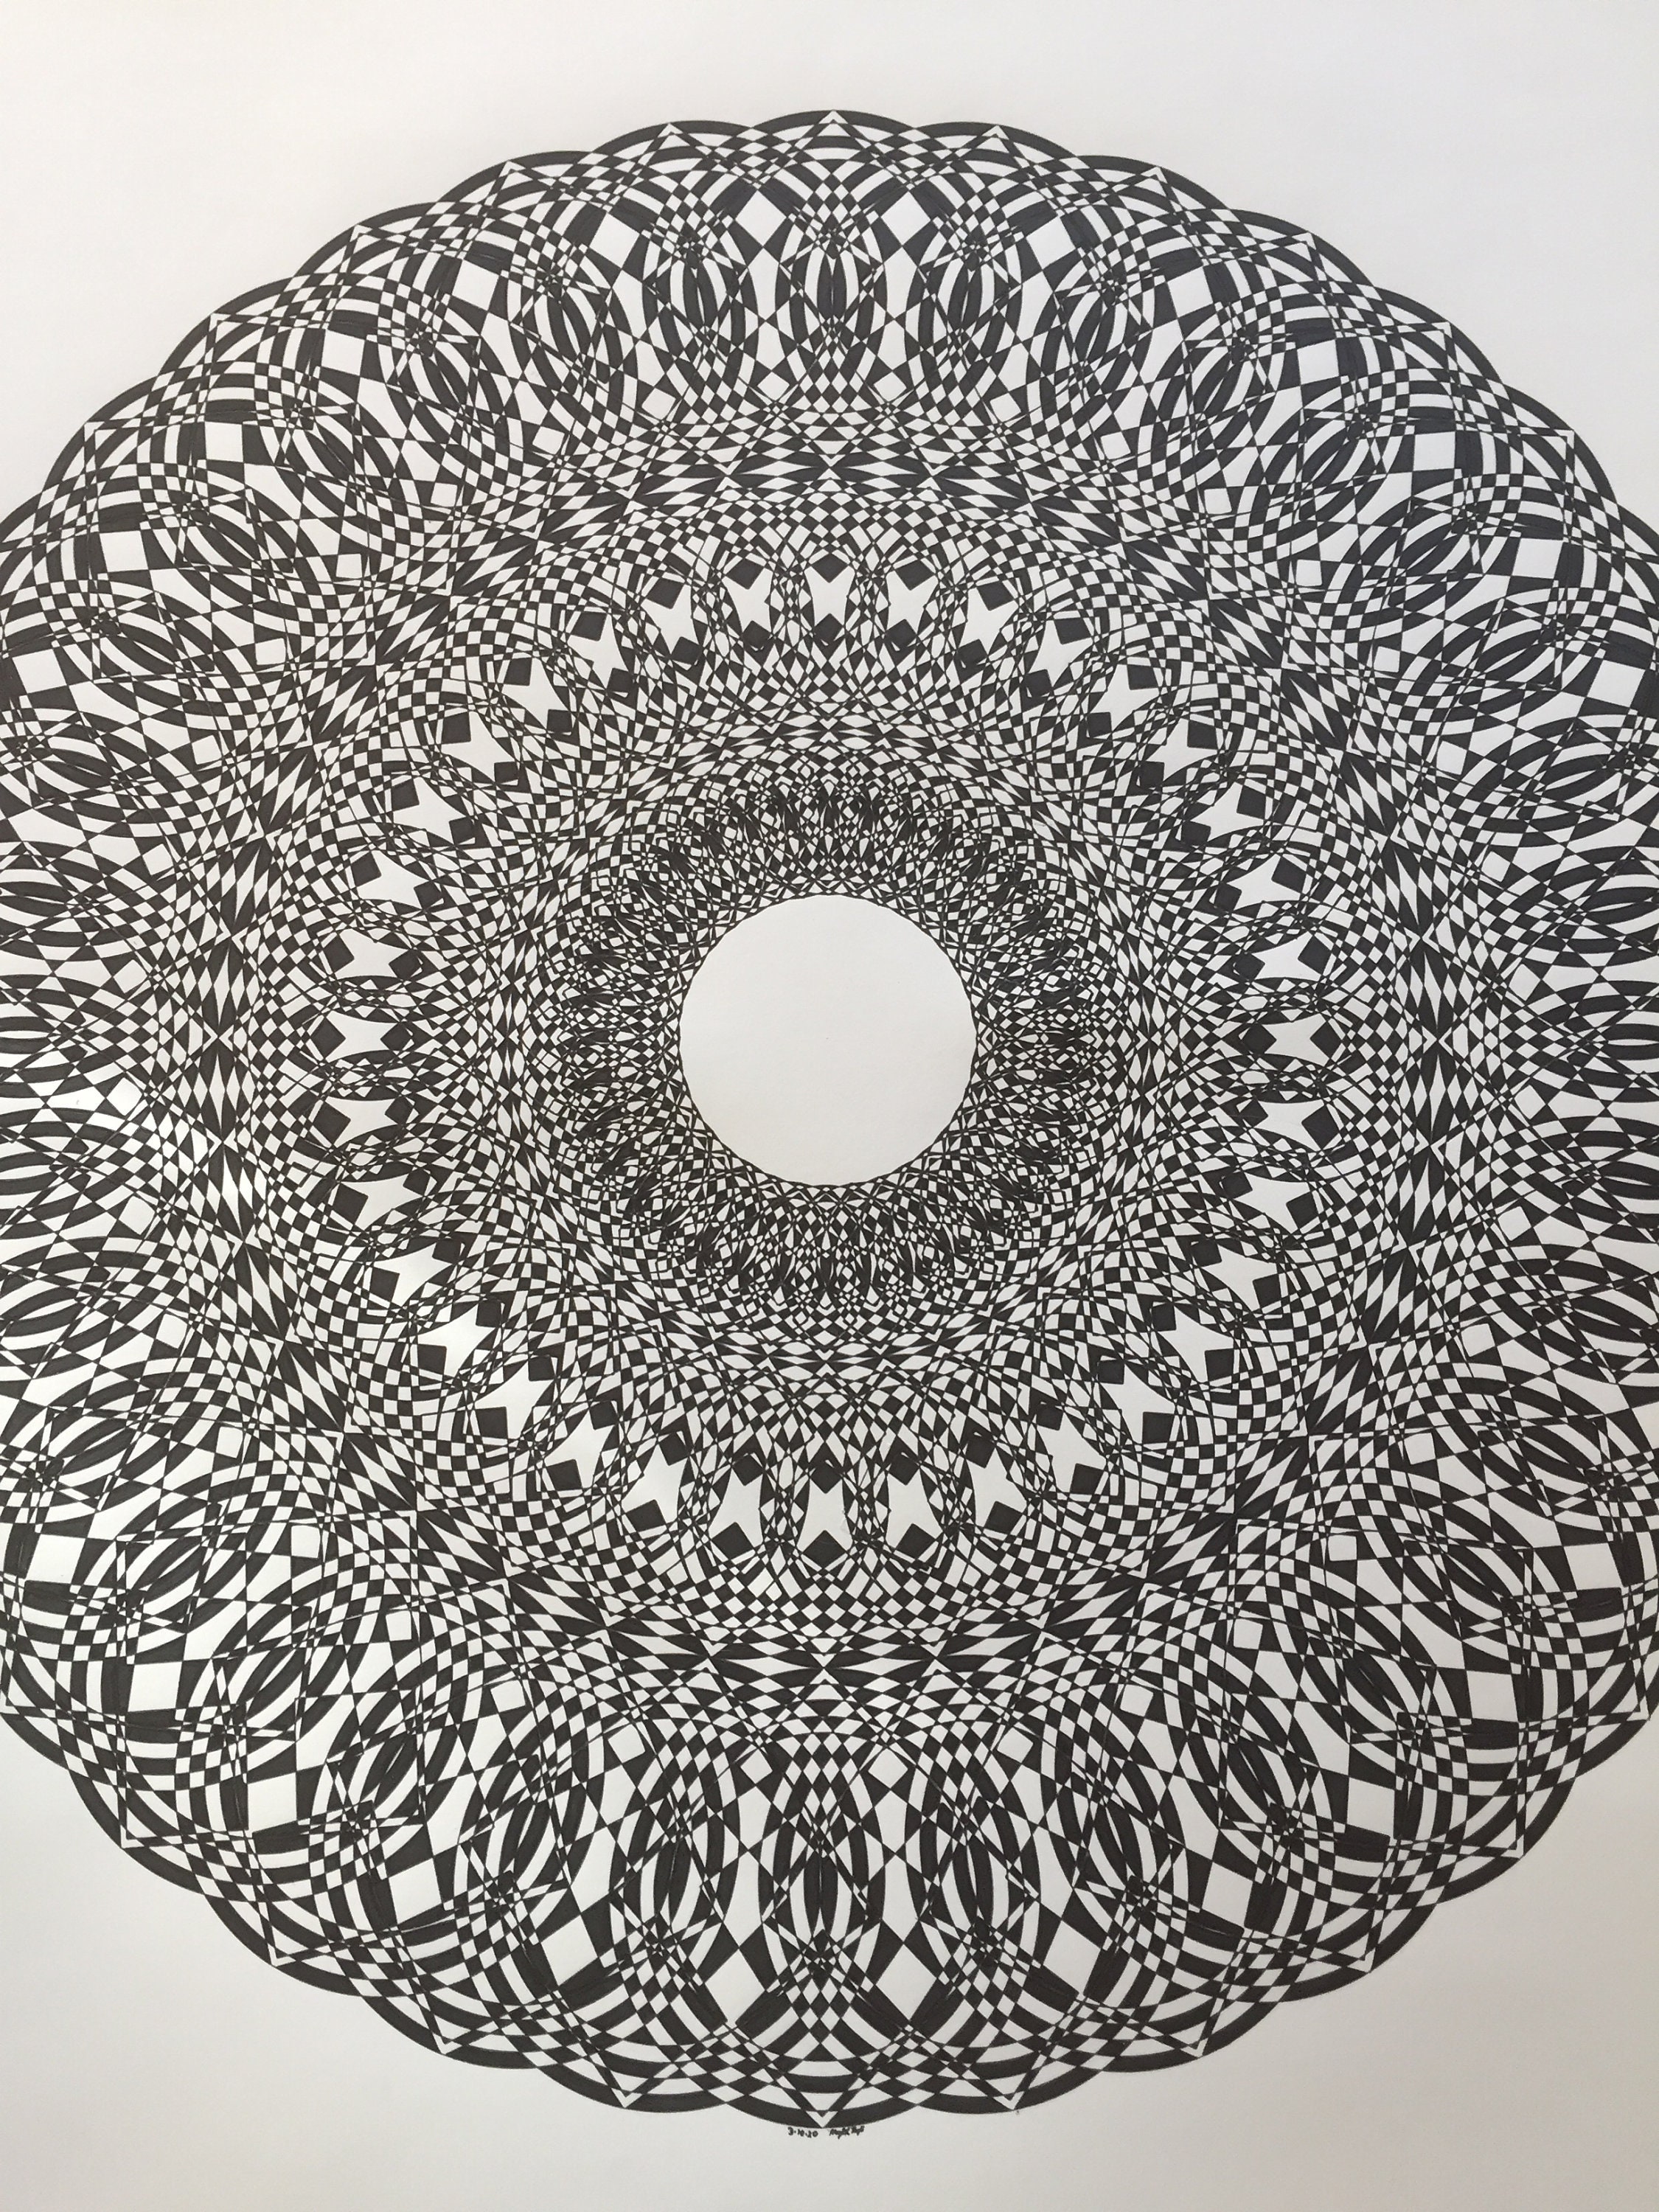 Rupsa drawing $ - Mandala art 😊 black paper with white pen 😊